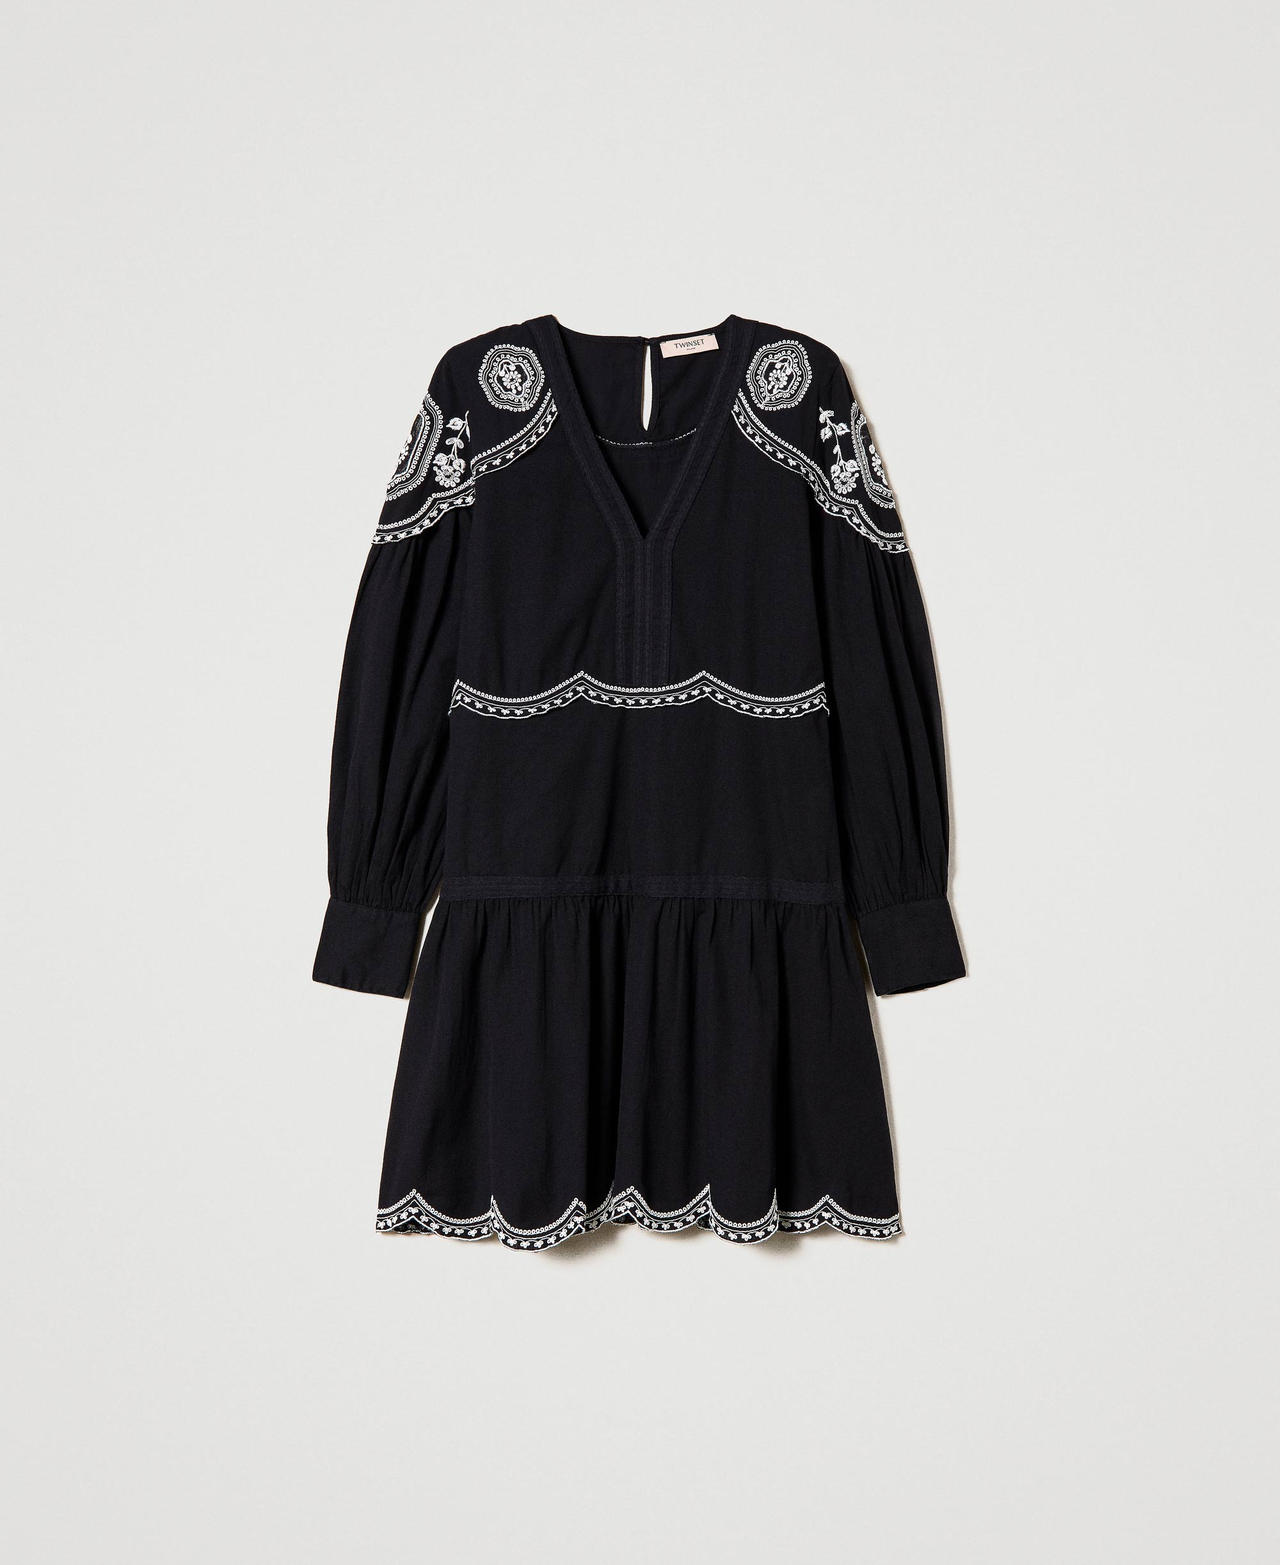 Robe avec broderies contrastées Broderie Blanc « Neige » / Noir Femme 231TP2490-0S